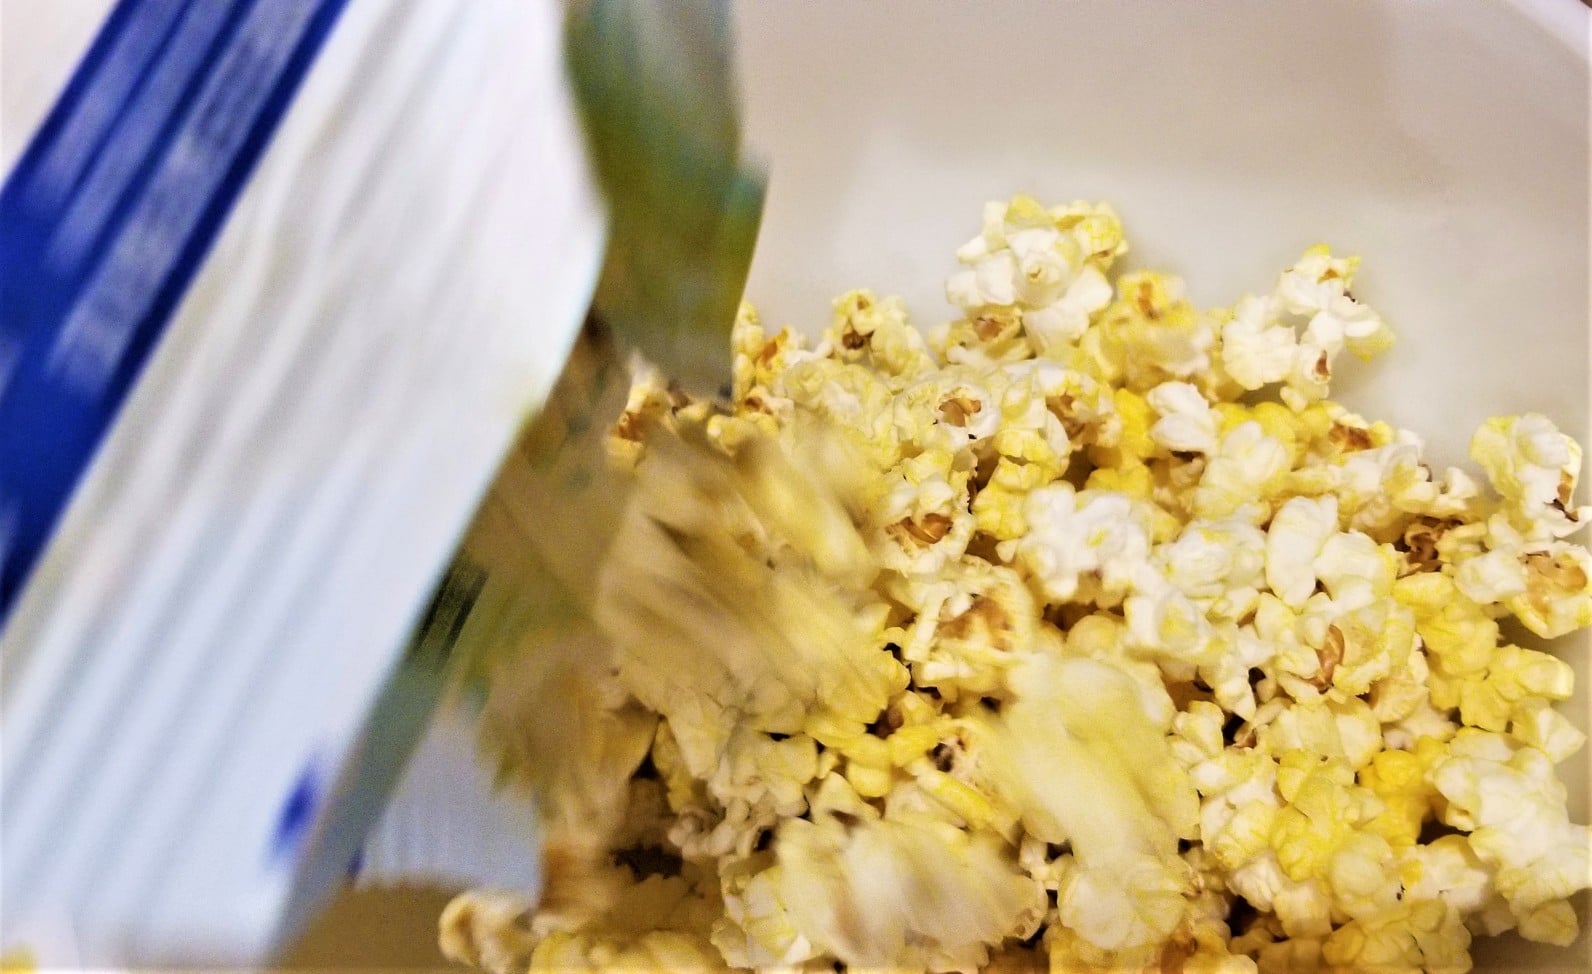 Can You Reheat Popcorn?